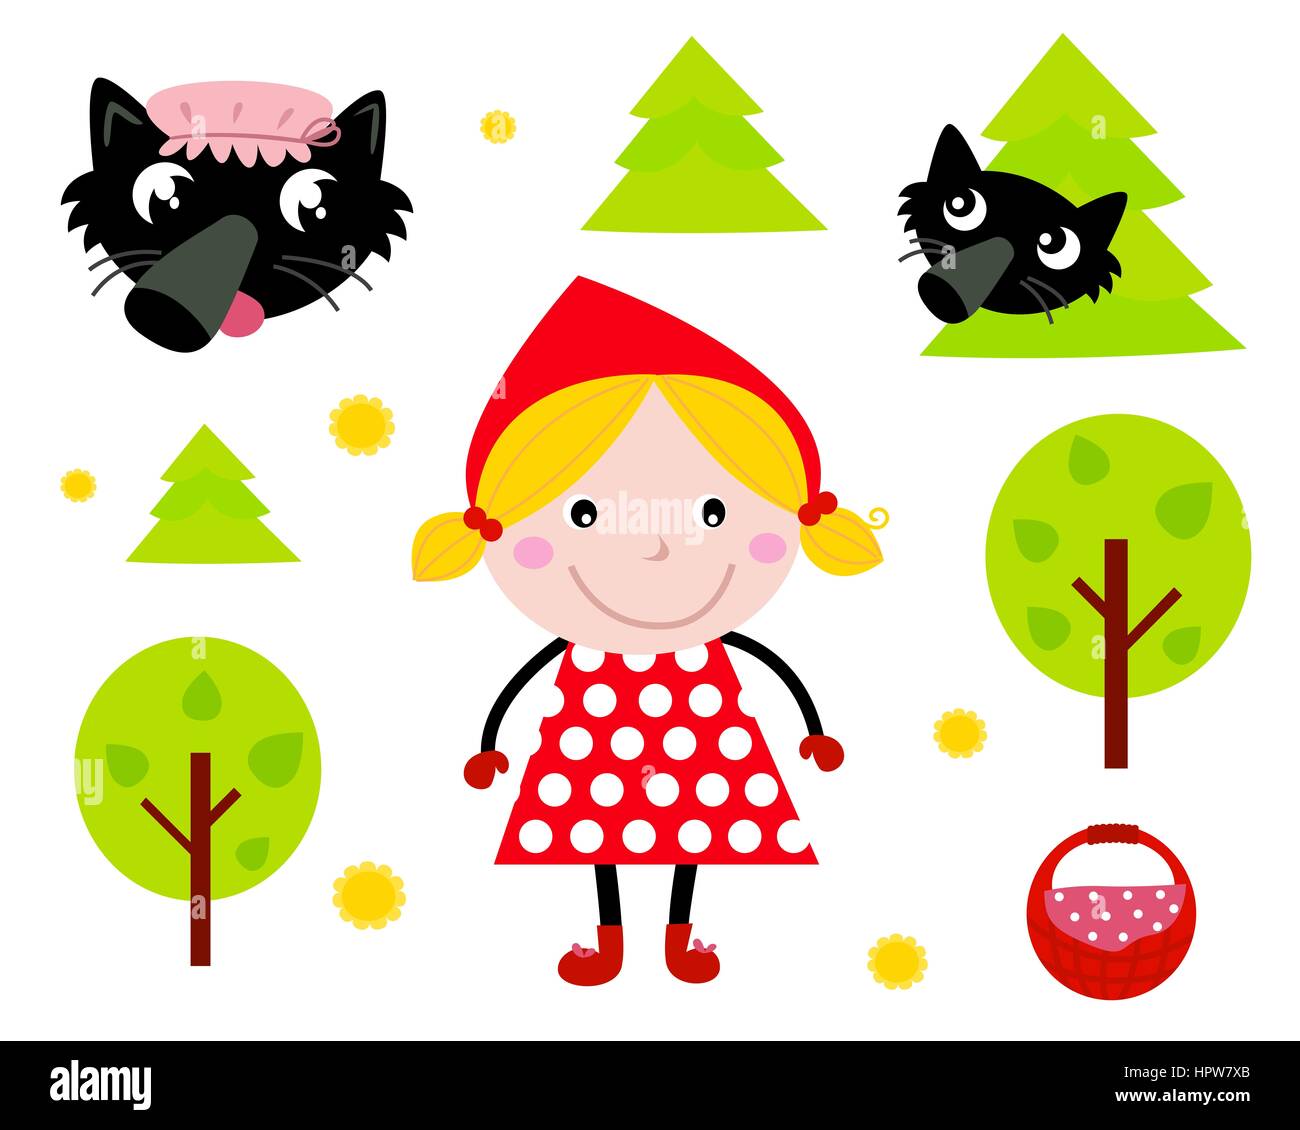 9884259 - Red riding Hood und Wolf Märchen Symbole isoliert auf weiss. Vektor-Cartoon-Illustration. Stockfoto